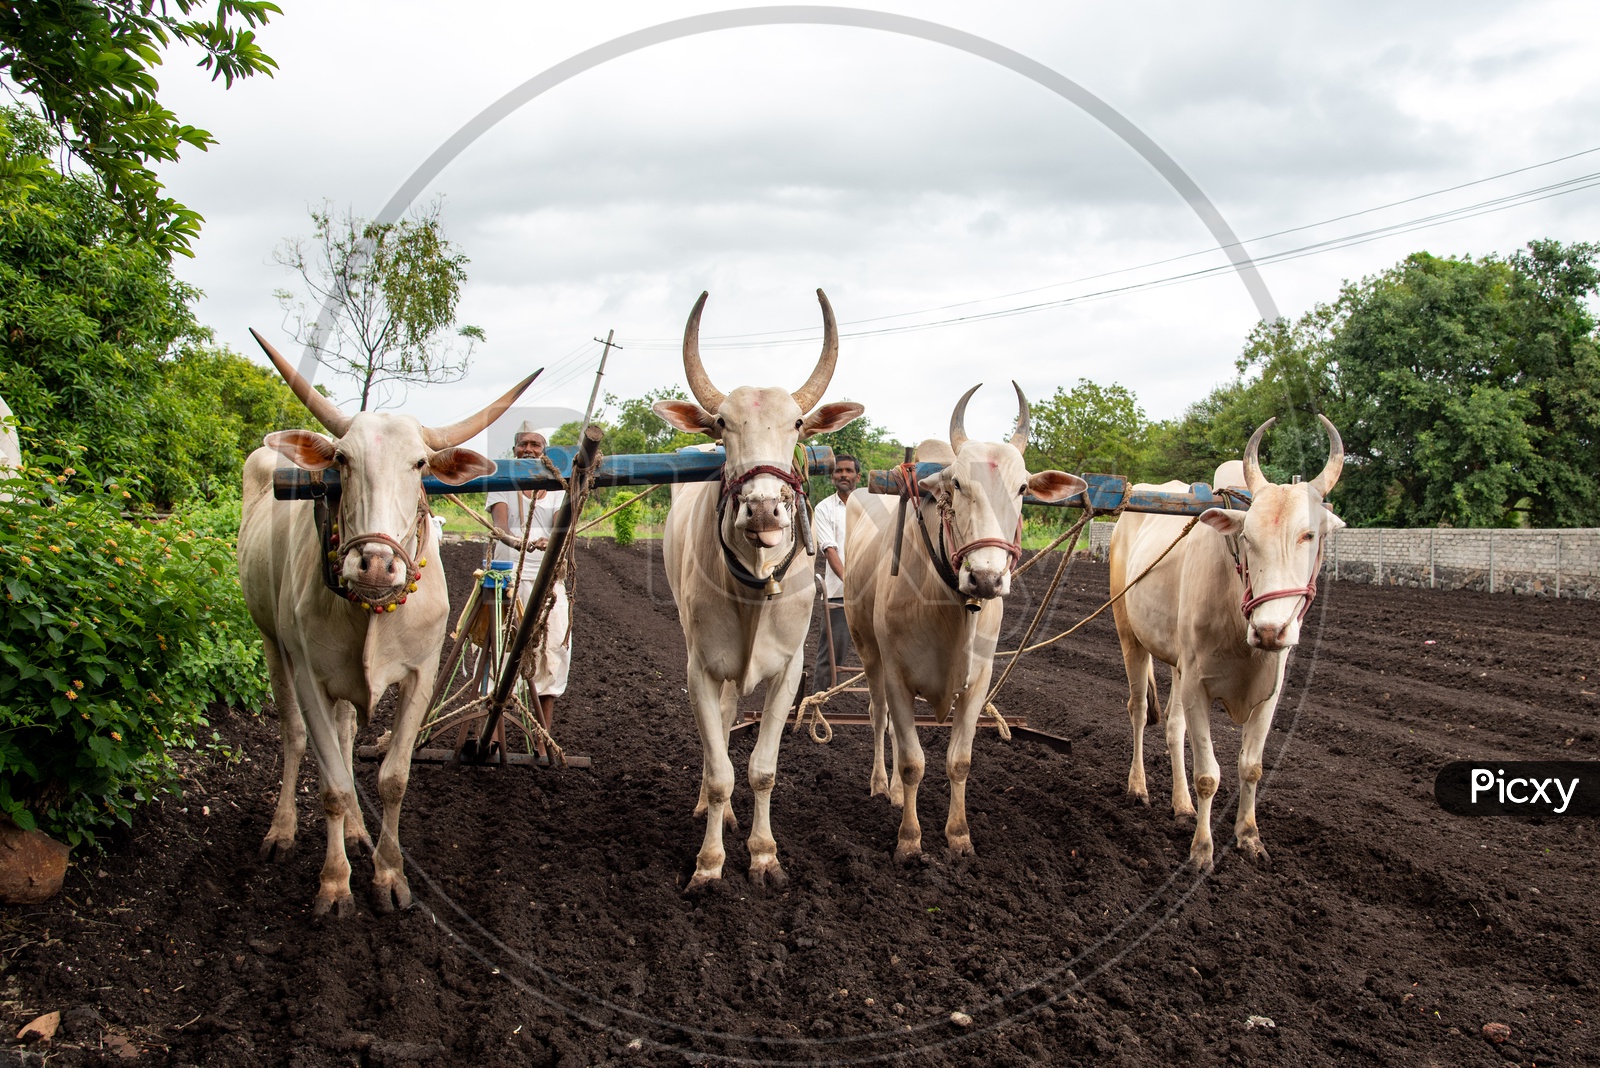 Bullocks used for farming in a village in Maharashtra